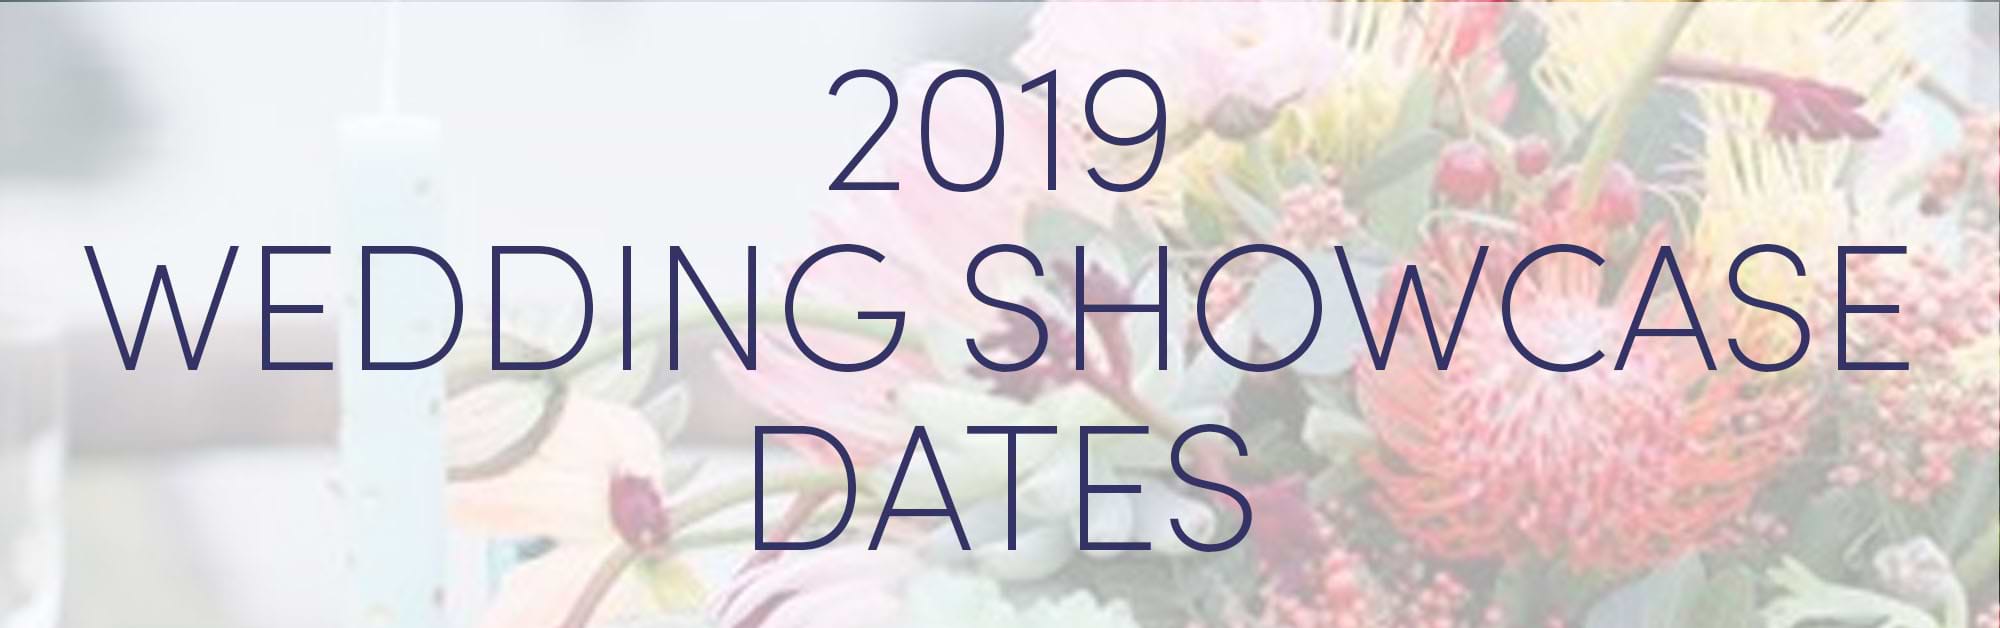 Wedding Showcase Dates 2019 Wedgewood Weddings